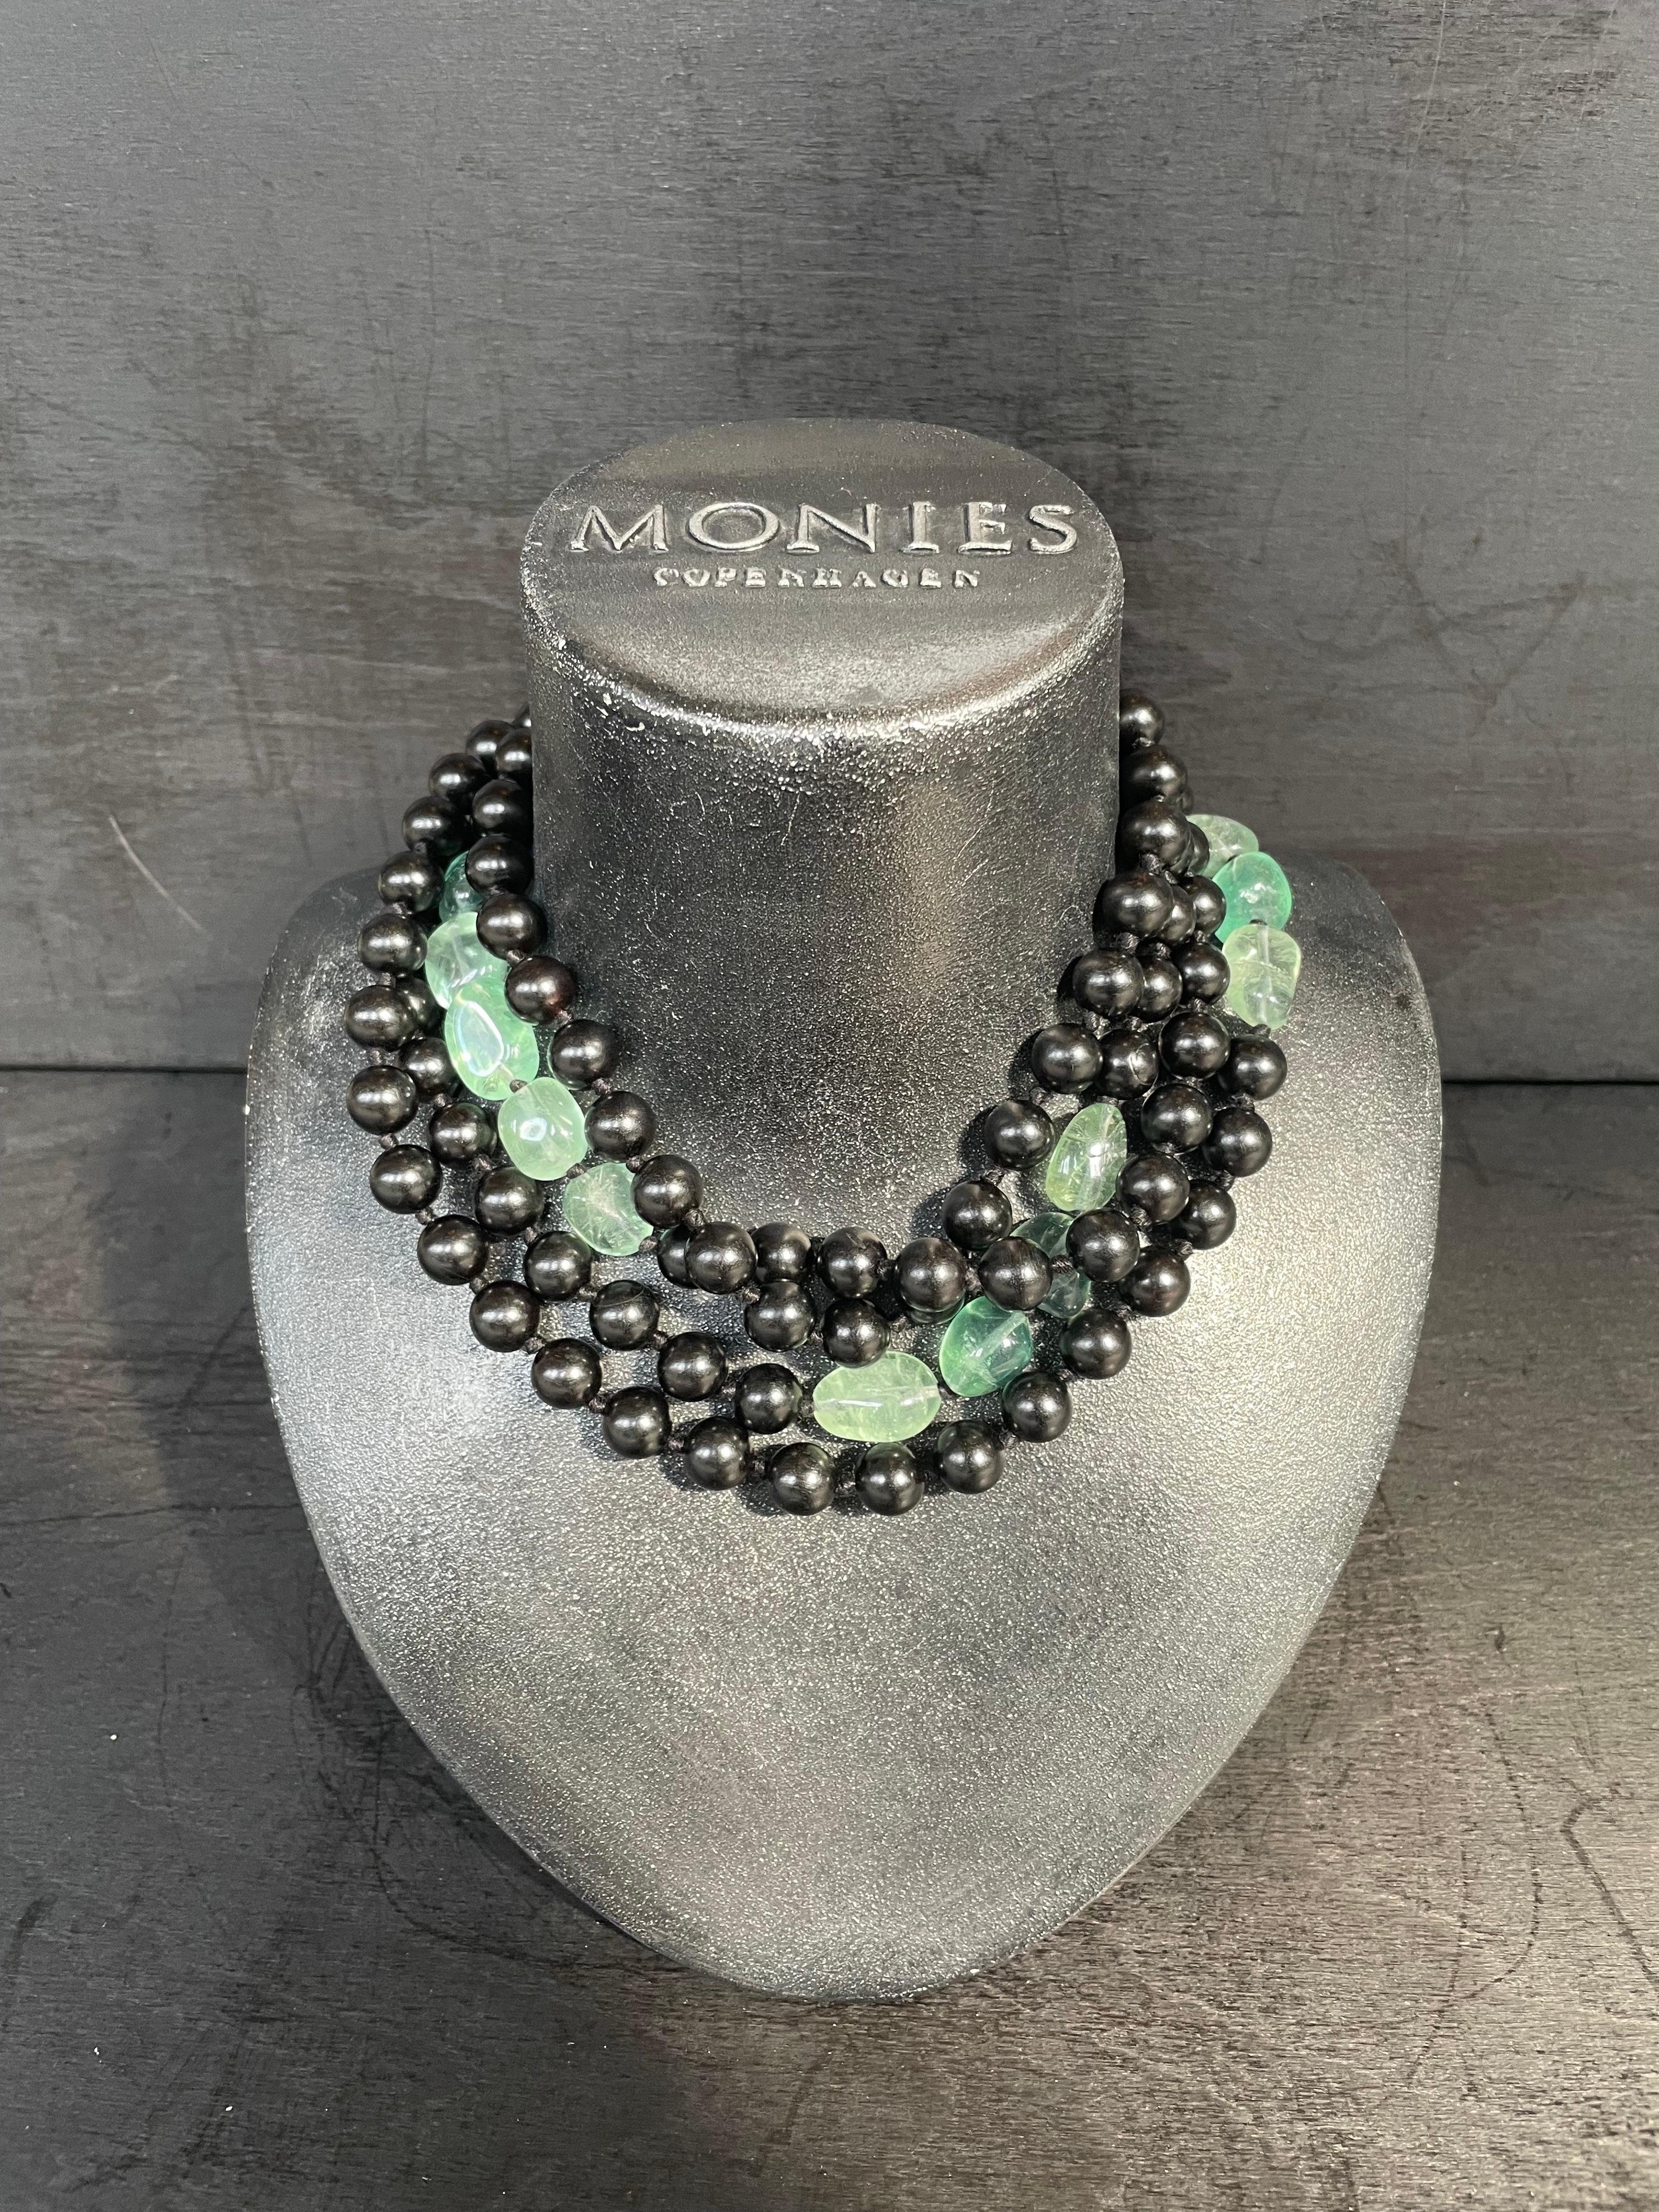 One-of-a-kind statement necklace from the Danish jewellery brand, Monies. 
Made in Green Fluorite & Ebony

Handcrafted in the Monies Atelier in Copenhagen.